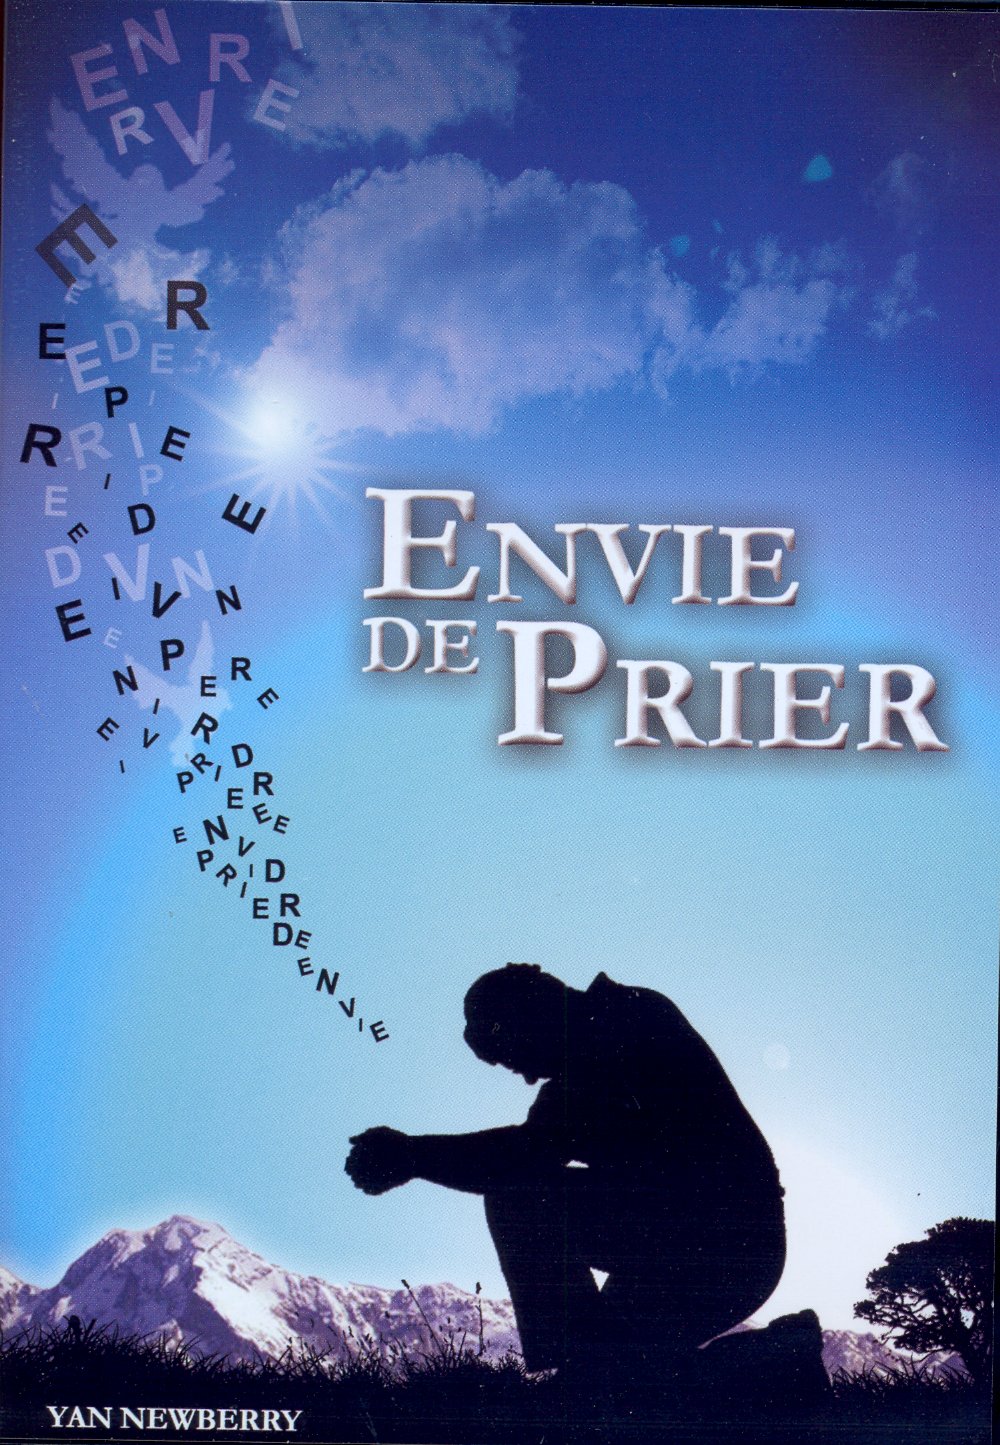 Envie de prier 1 [DVD]